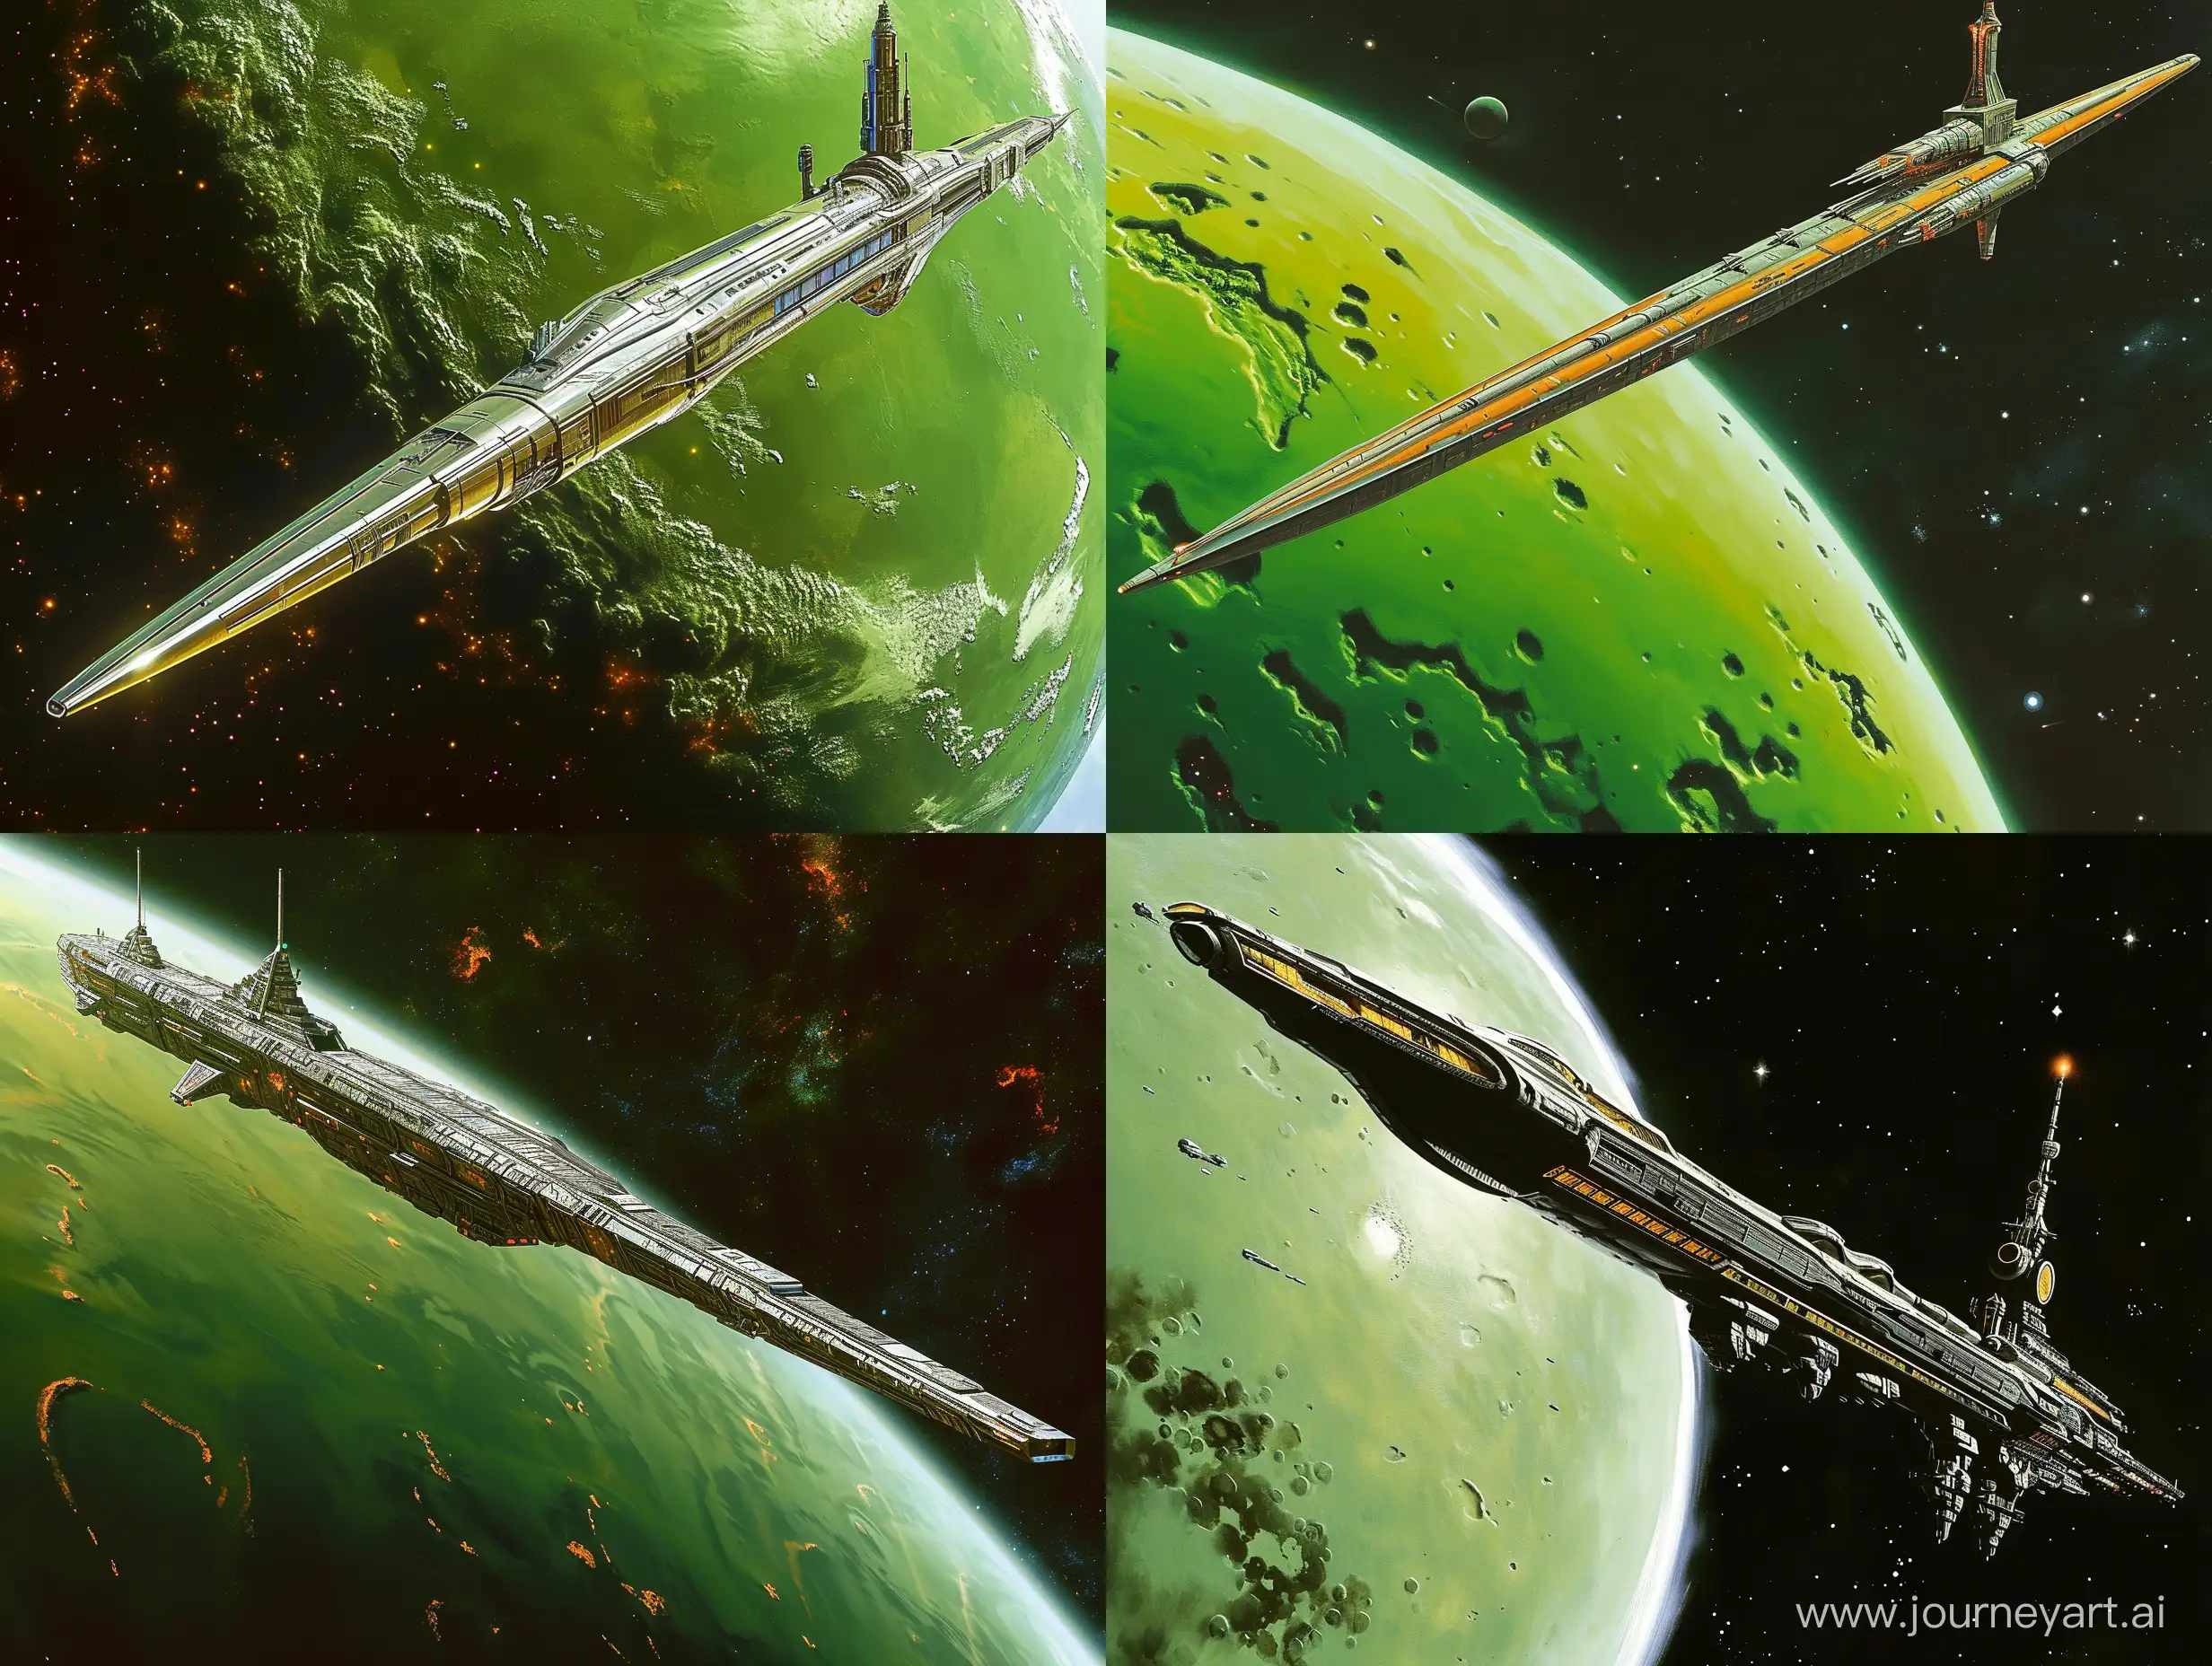 Hyperrealistic-Star-Destroyer-in-Retro-SciFi-Space-Battle